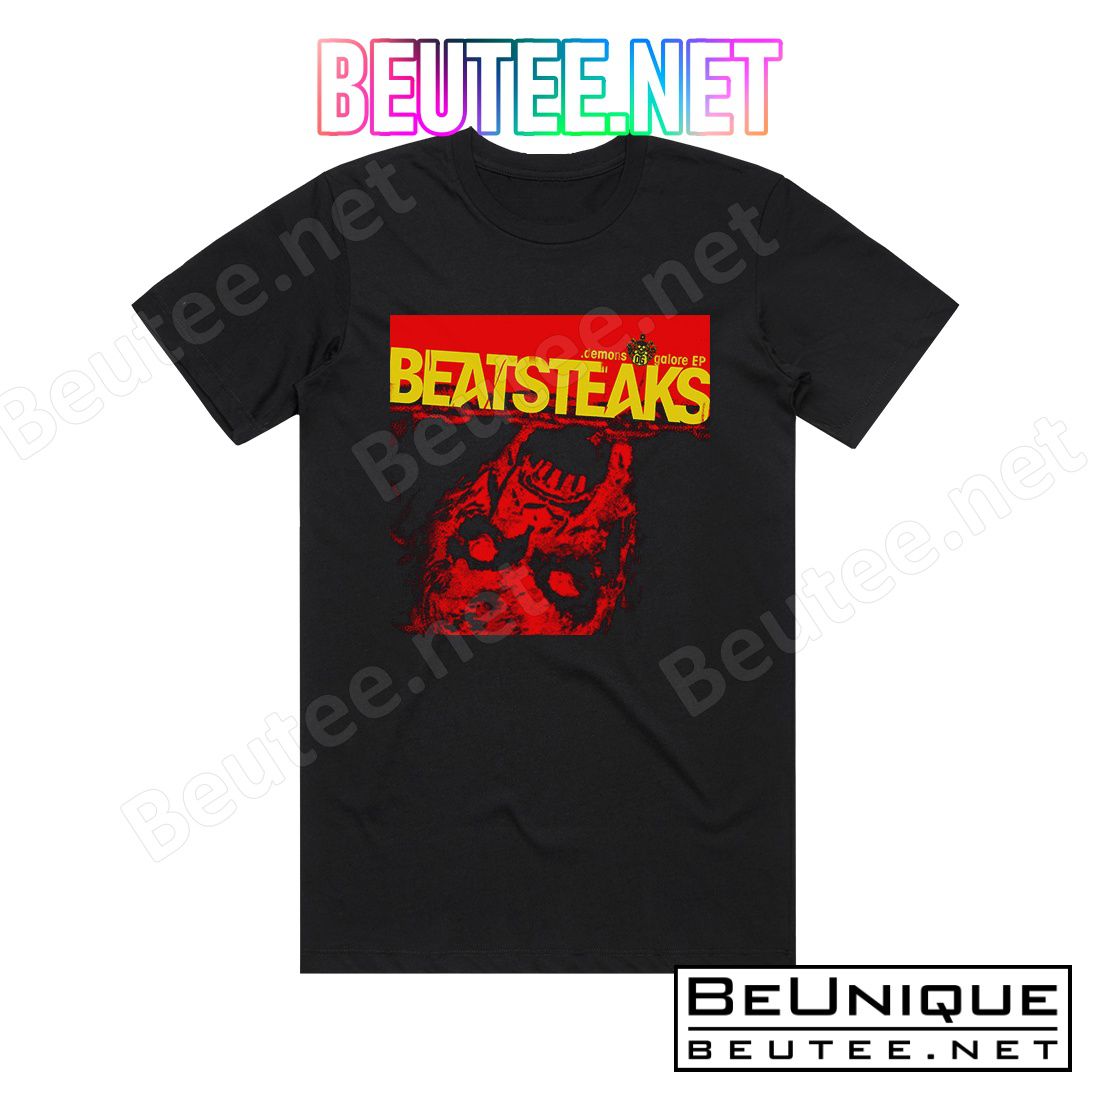 Beatsteaks Demons Galore Ep Album Cover T-Shirt